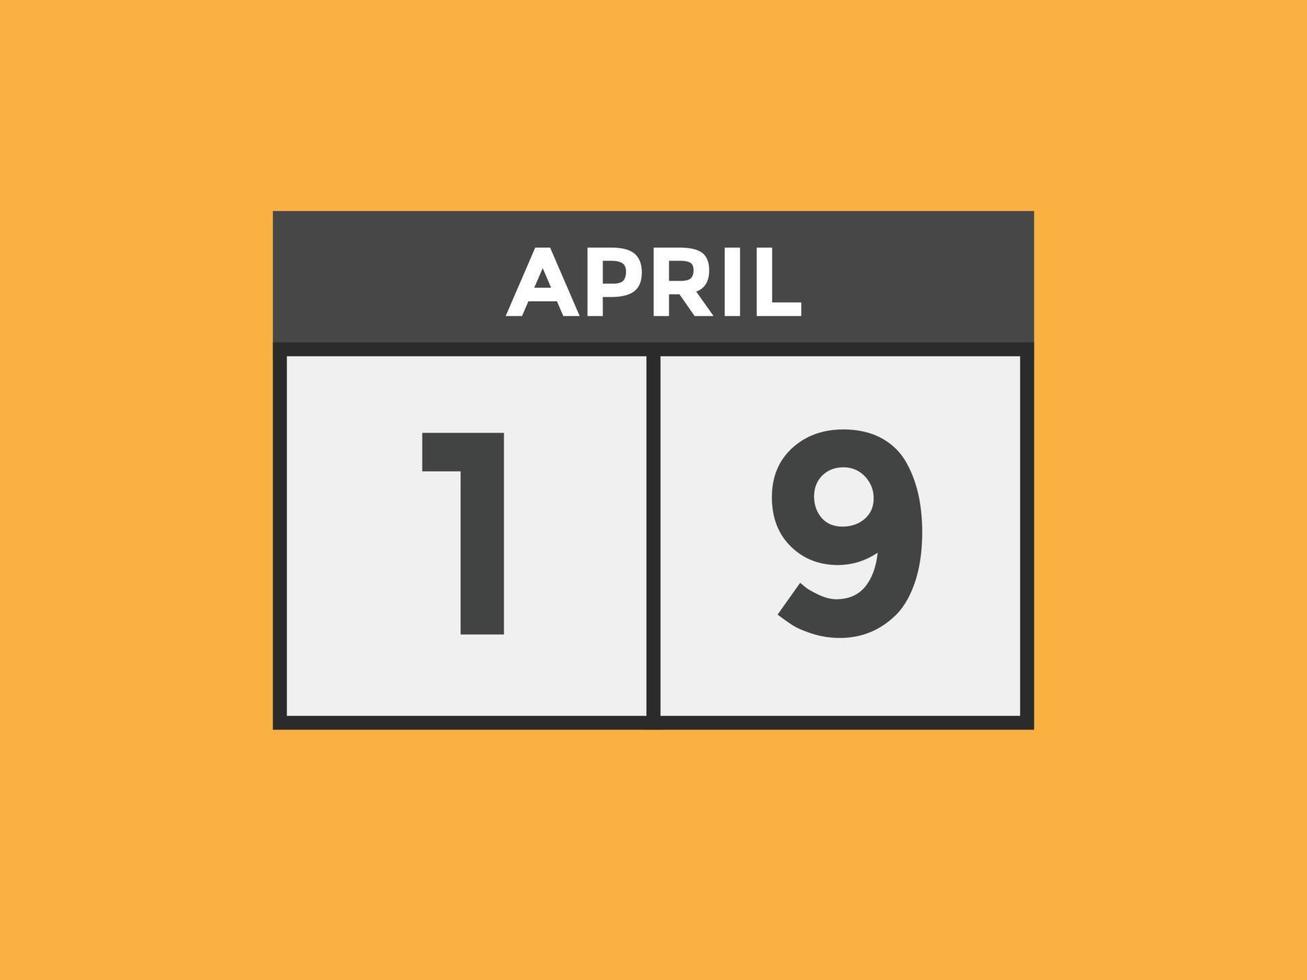 april 19 kalender påminnelse. 19:e april dagligen kalender ikon mall. kalender 19:e april ikon design mall. vektor illustration